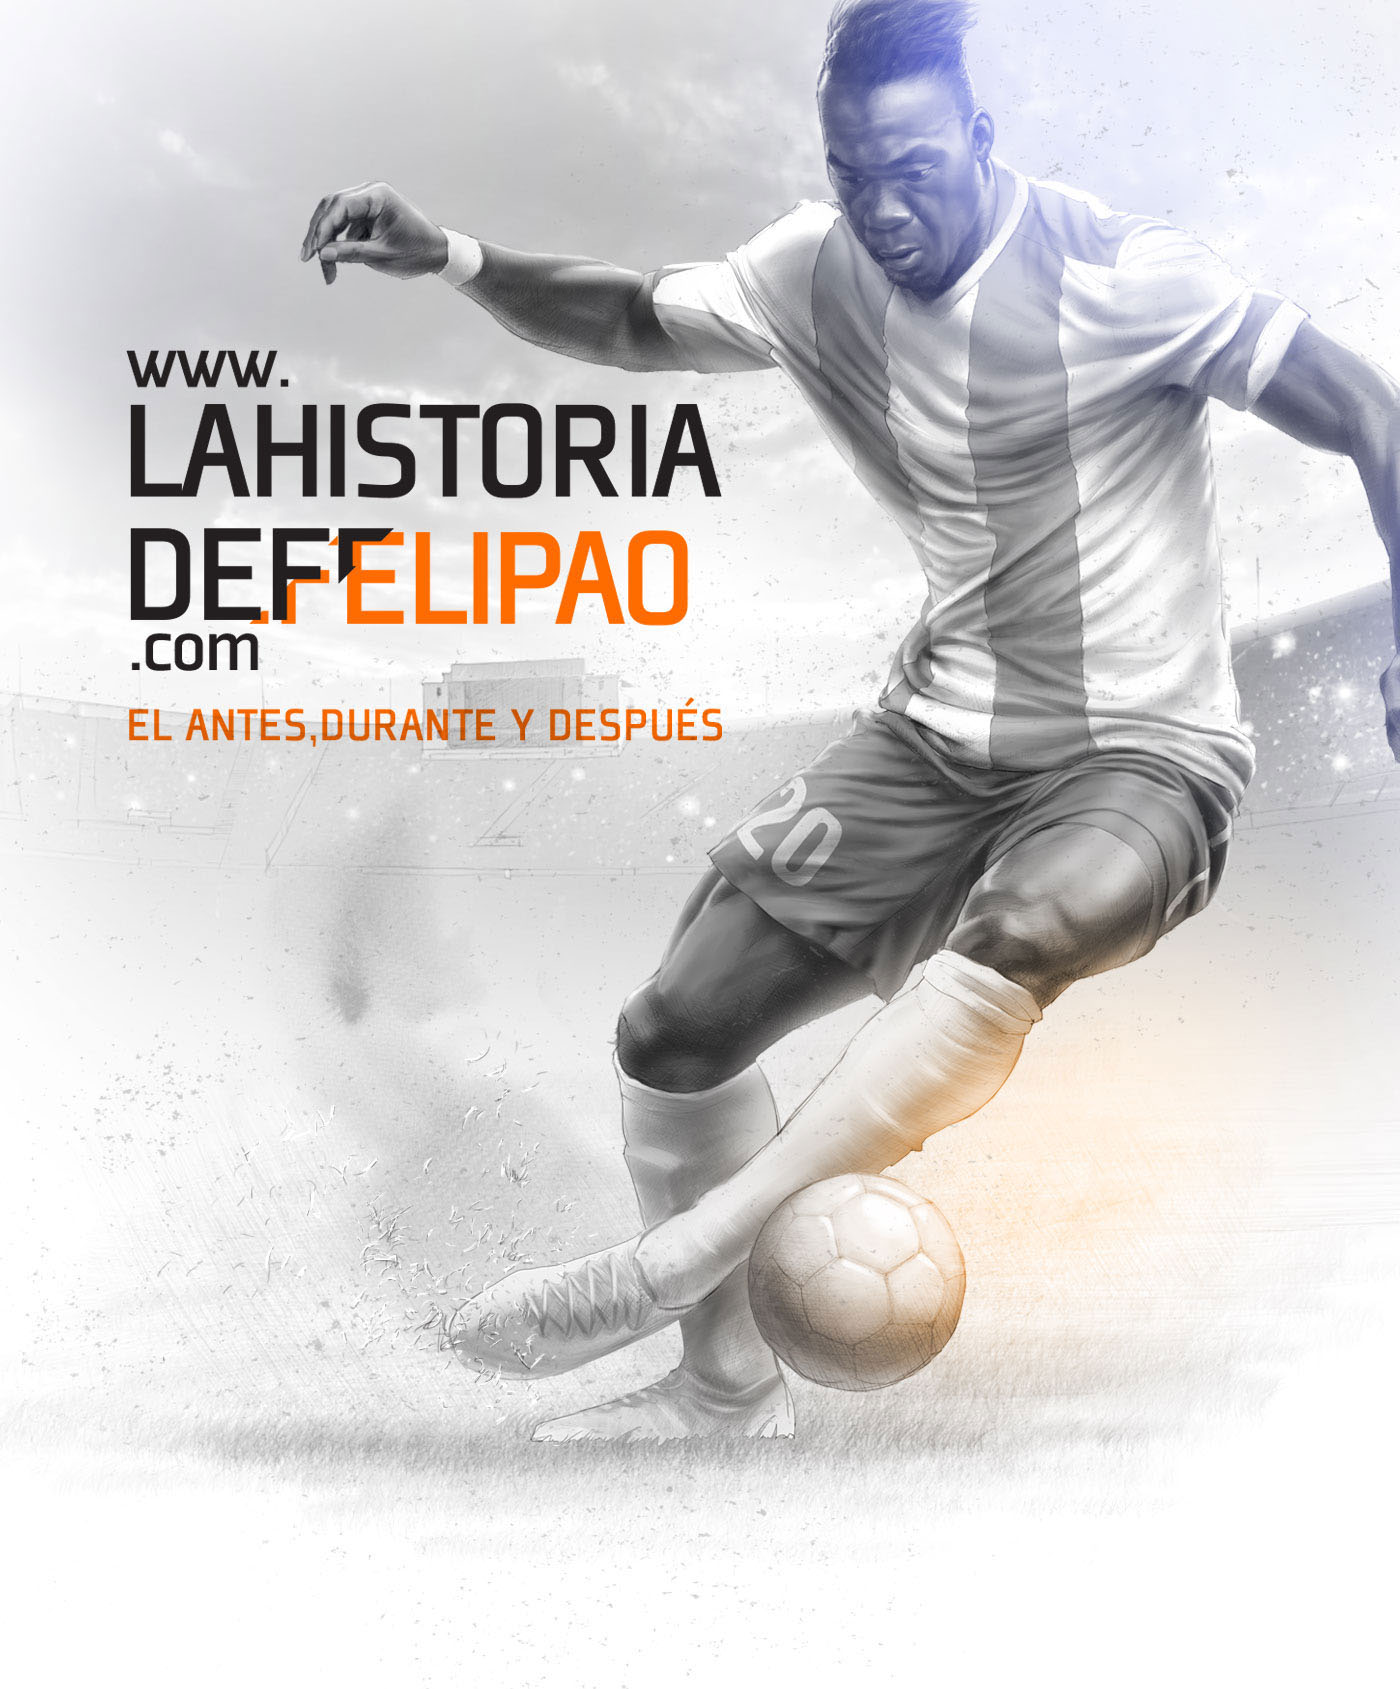 soccer gatorade Advertising  Documentary  sports historia felipao training game drink